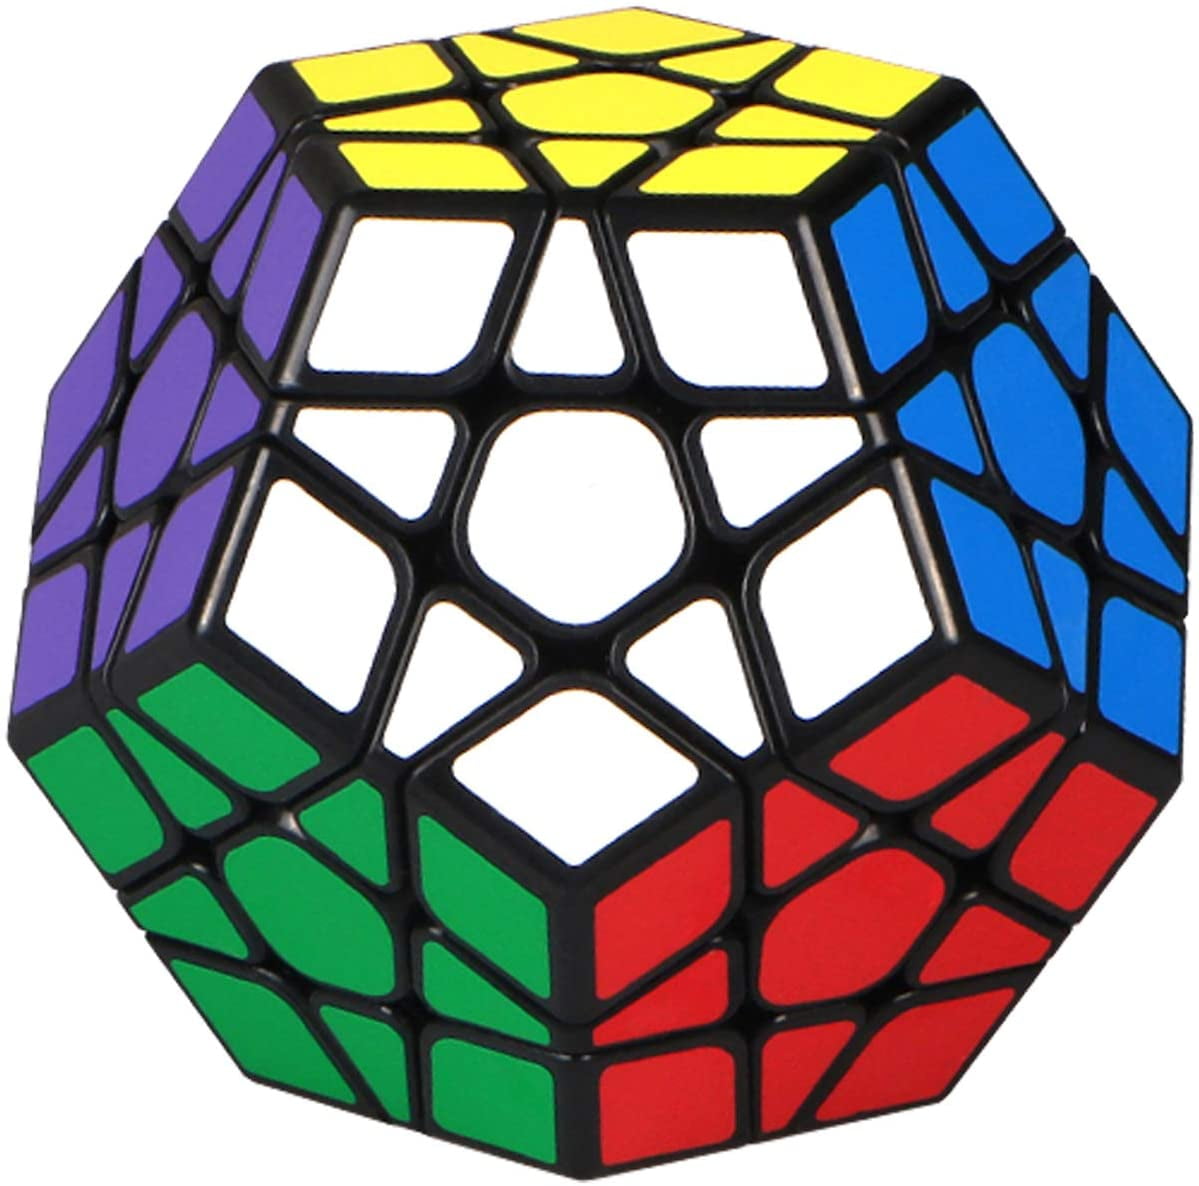 SS 8x8x8 Megaminx Petaminx Dodecahedron Twist Puzzle Magic Cube Intelligence Toy 